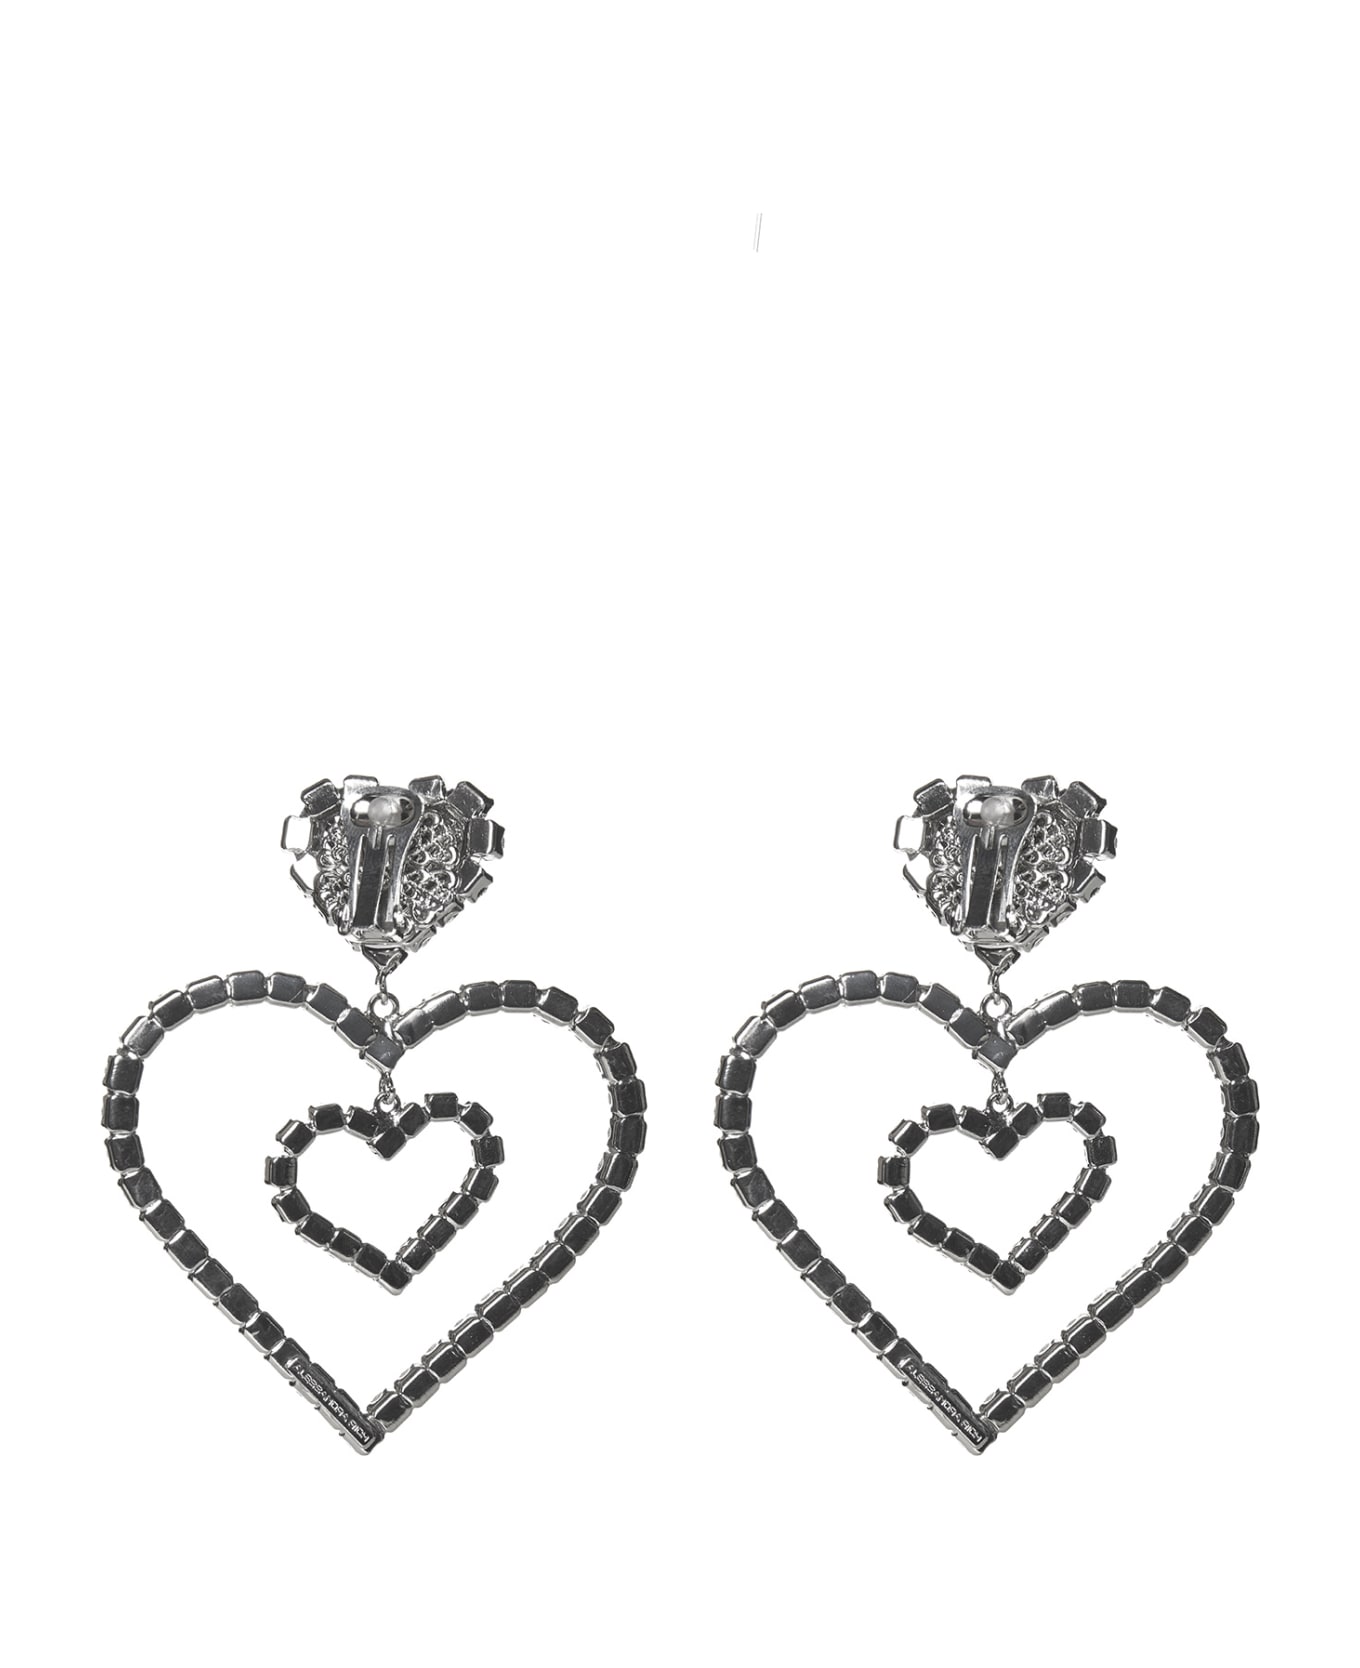 Alessandra Rich Earrings - Cry silver